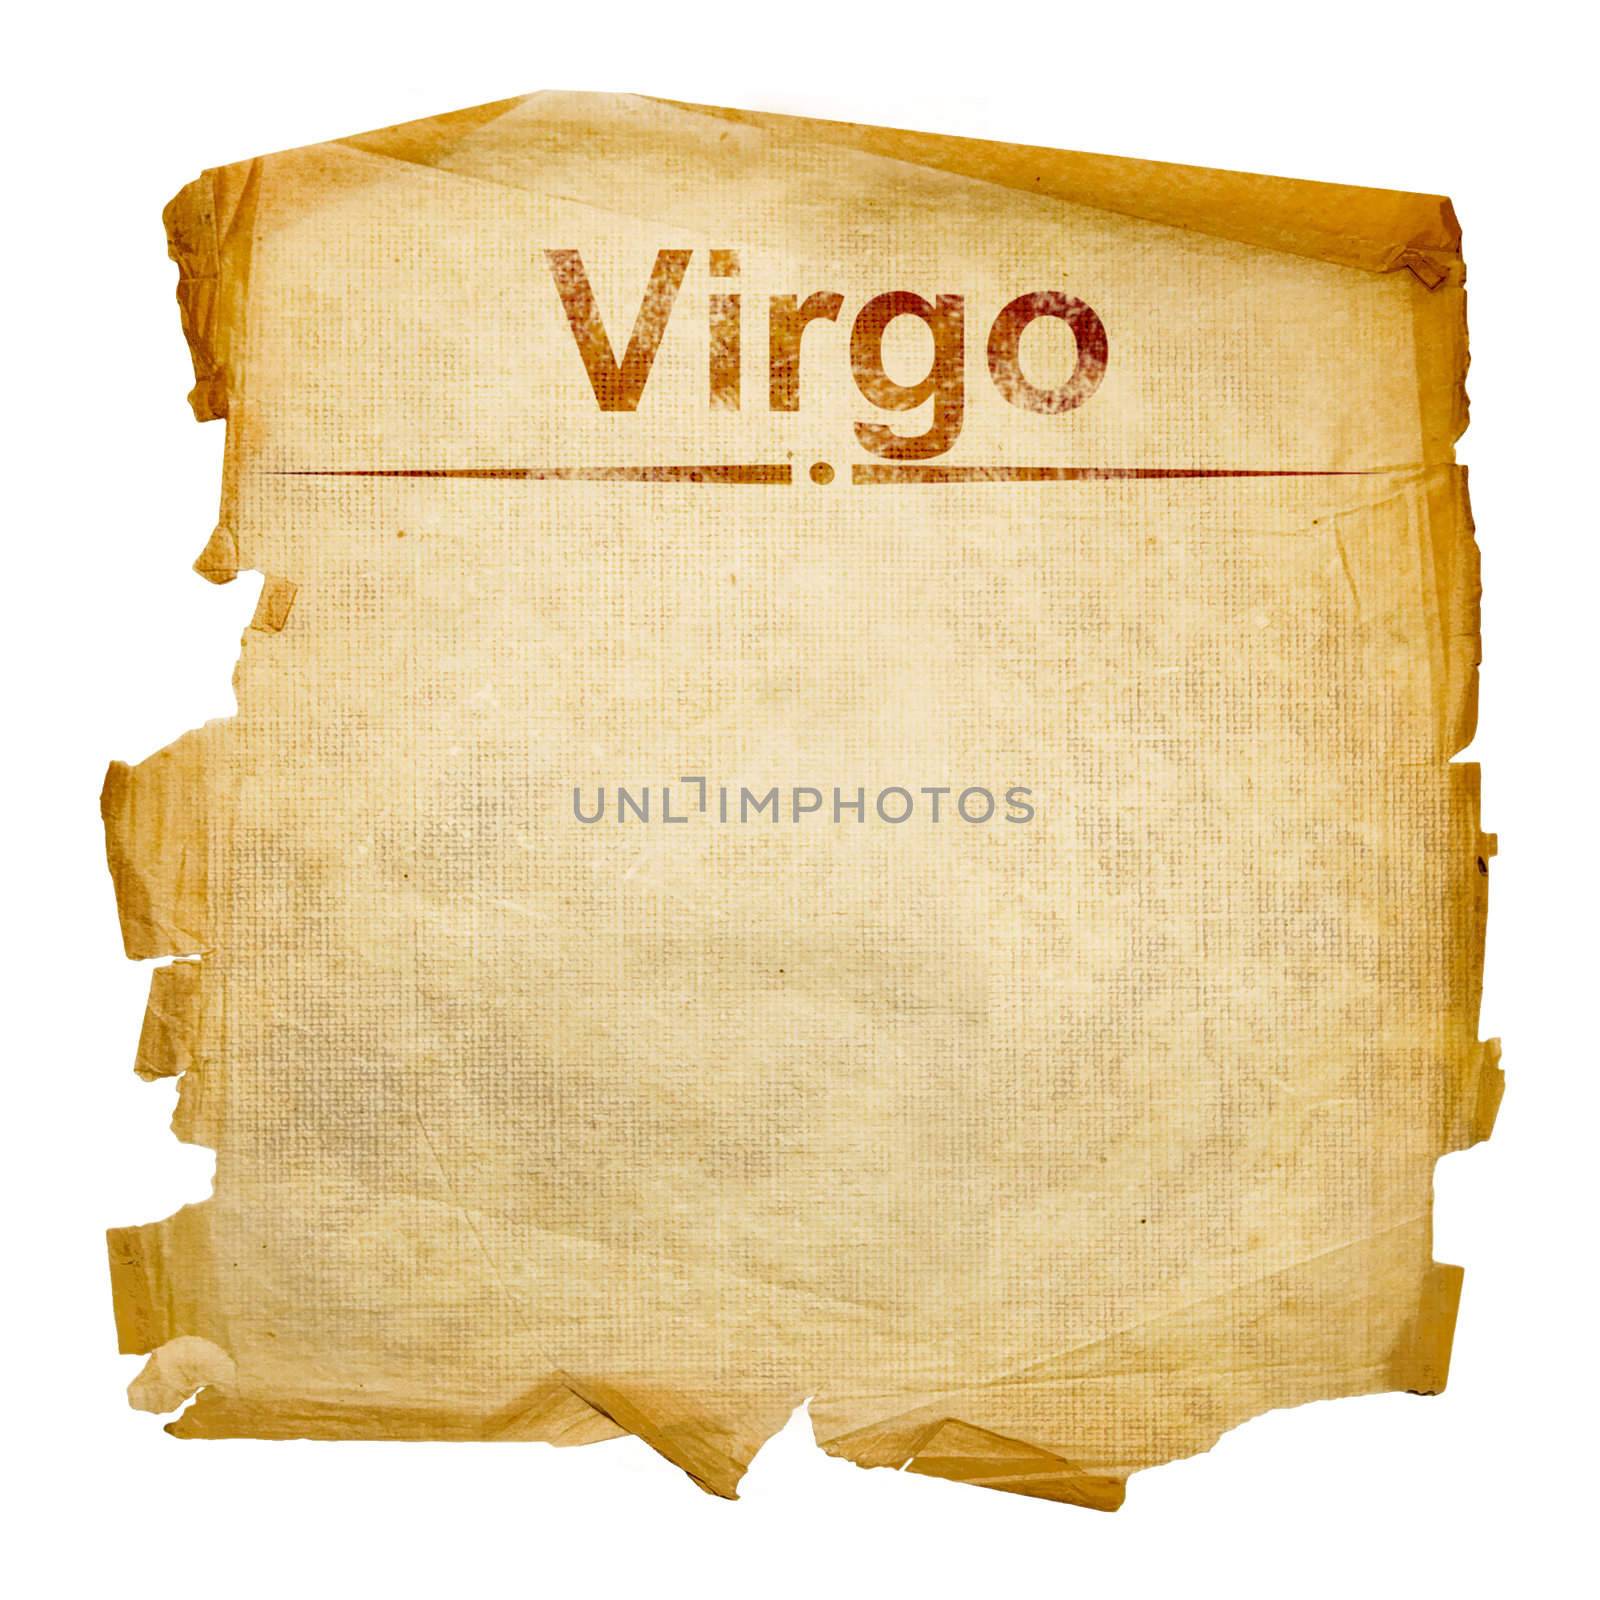 Virgo zodiac old, isolated on white background. by zeffss